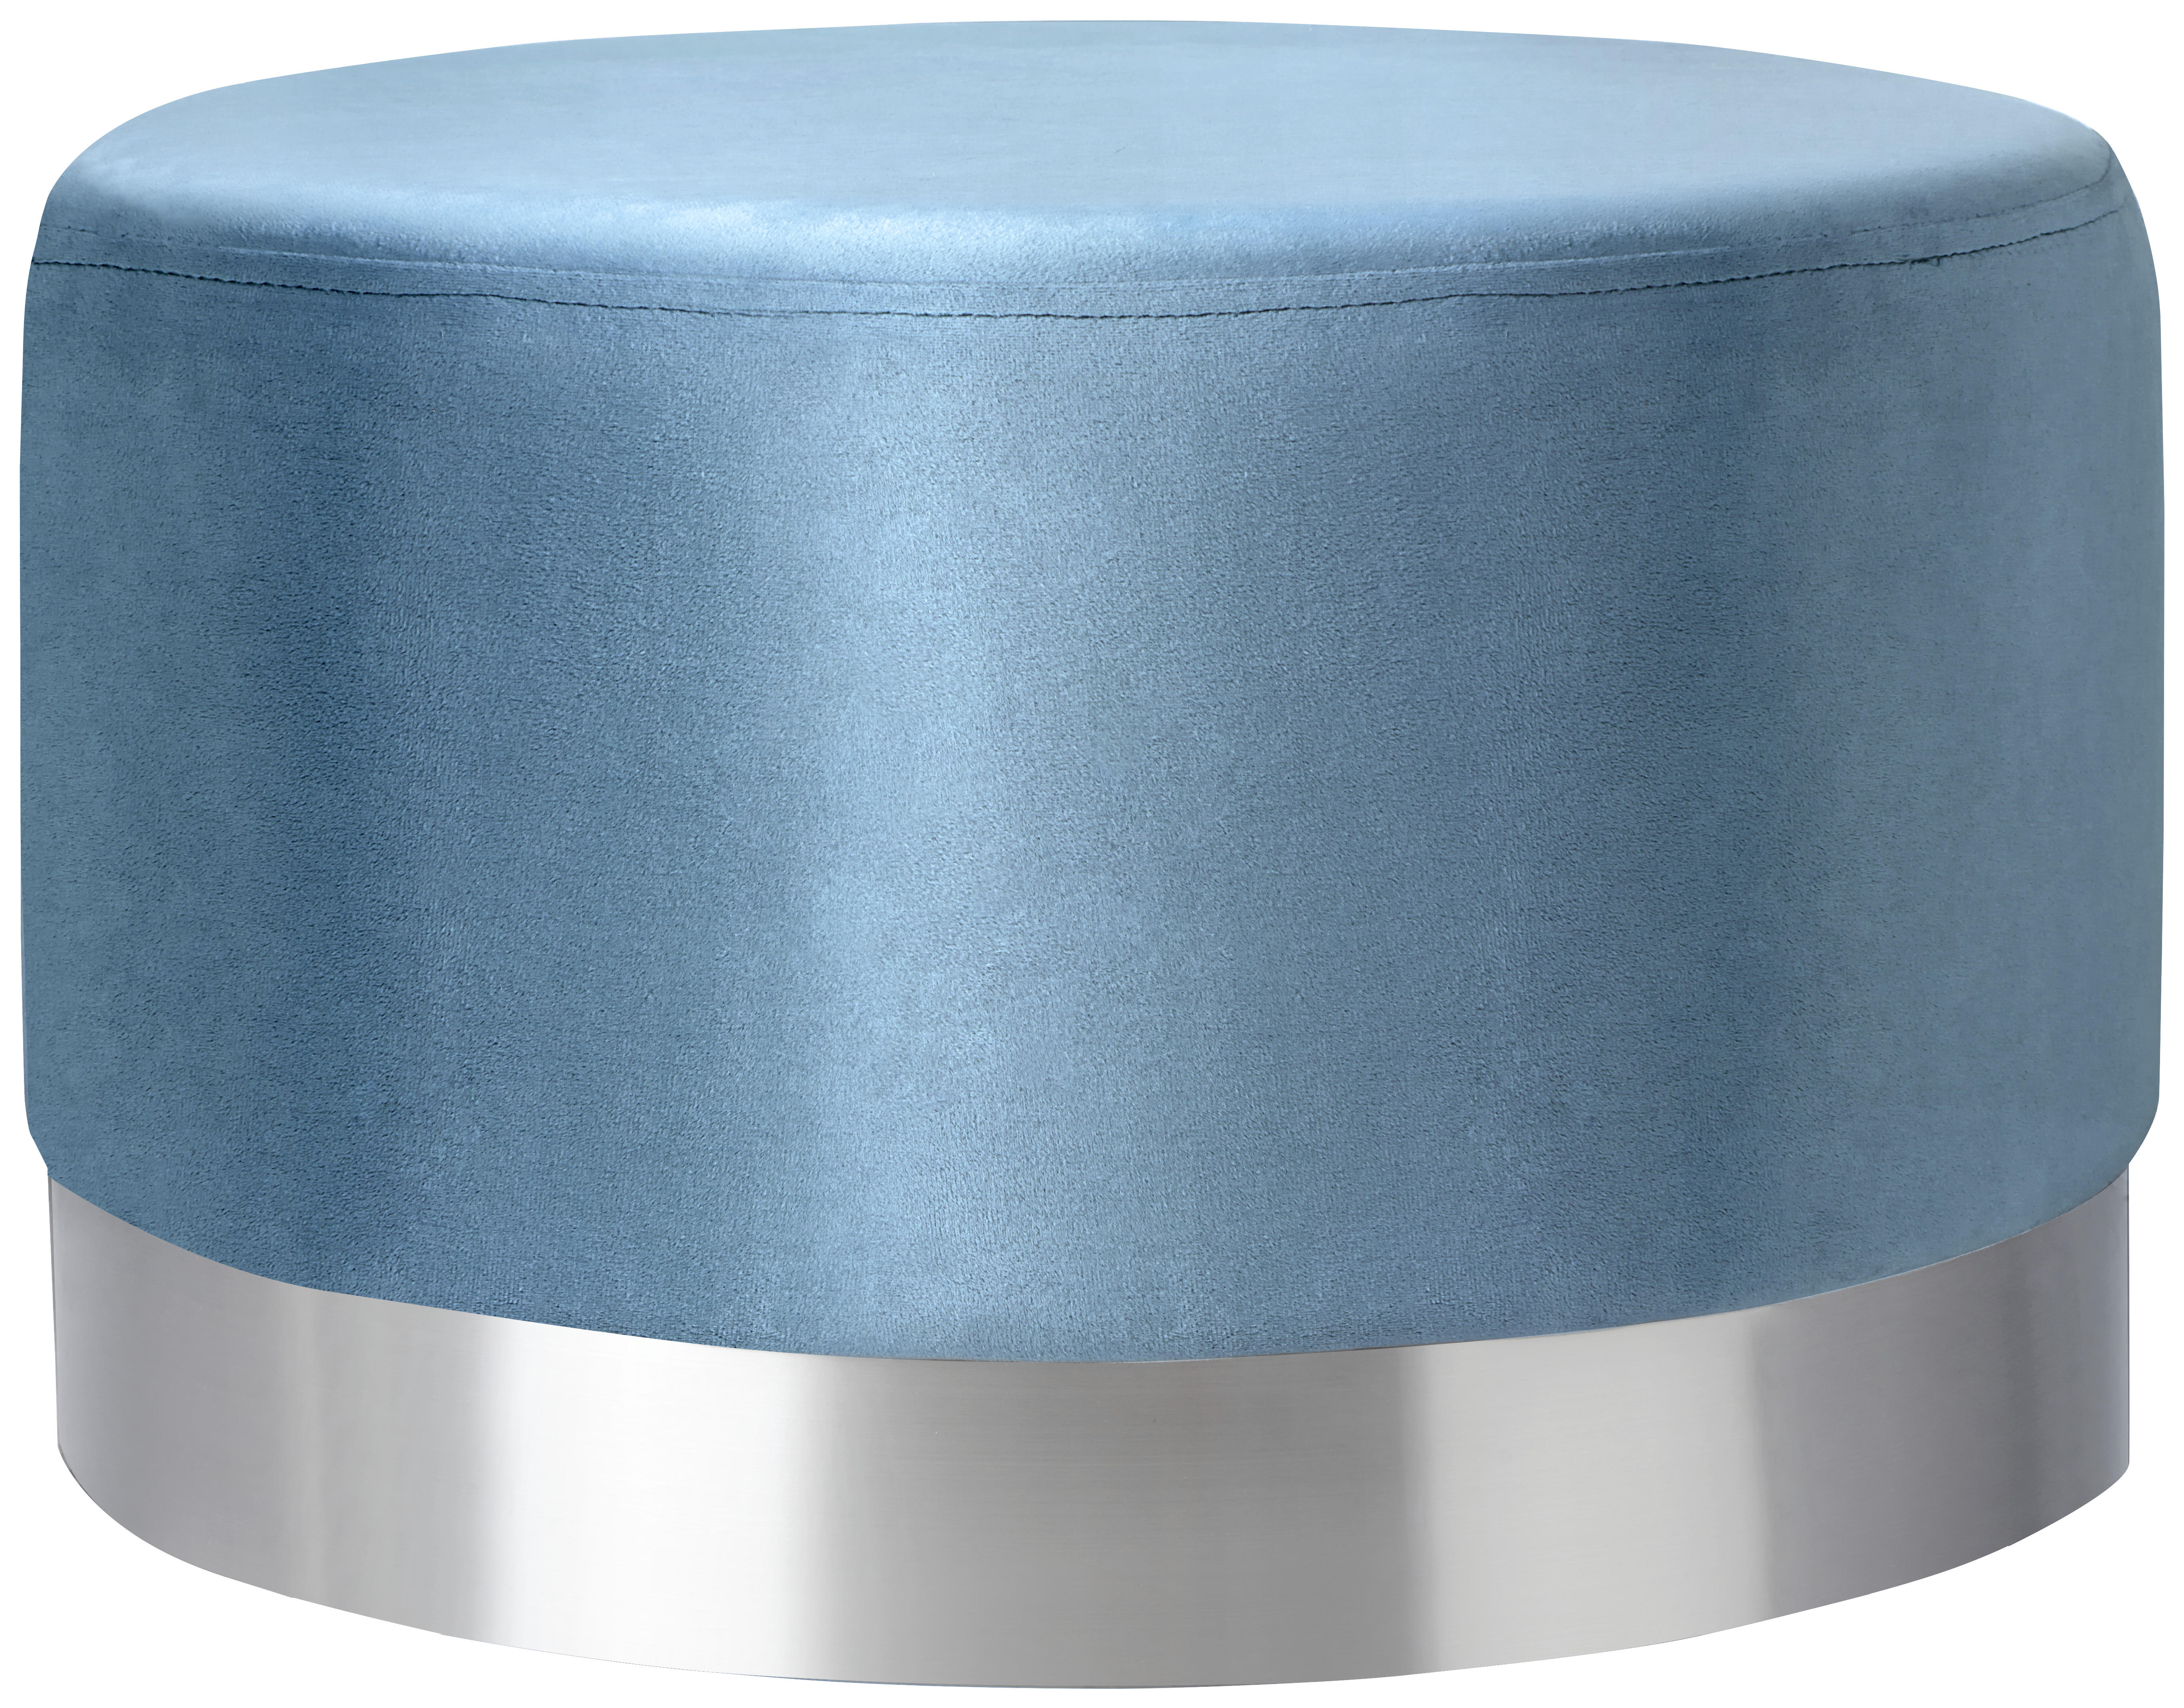 TABURE 55/35/55 cm  boja nerđajućeg čelika, petrolej plava  - boja nerđajućeg čelika/petrolej plava, Trendi, metal/tekstil (55/35/55cm) - Xora